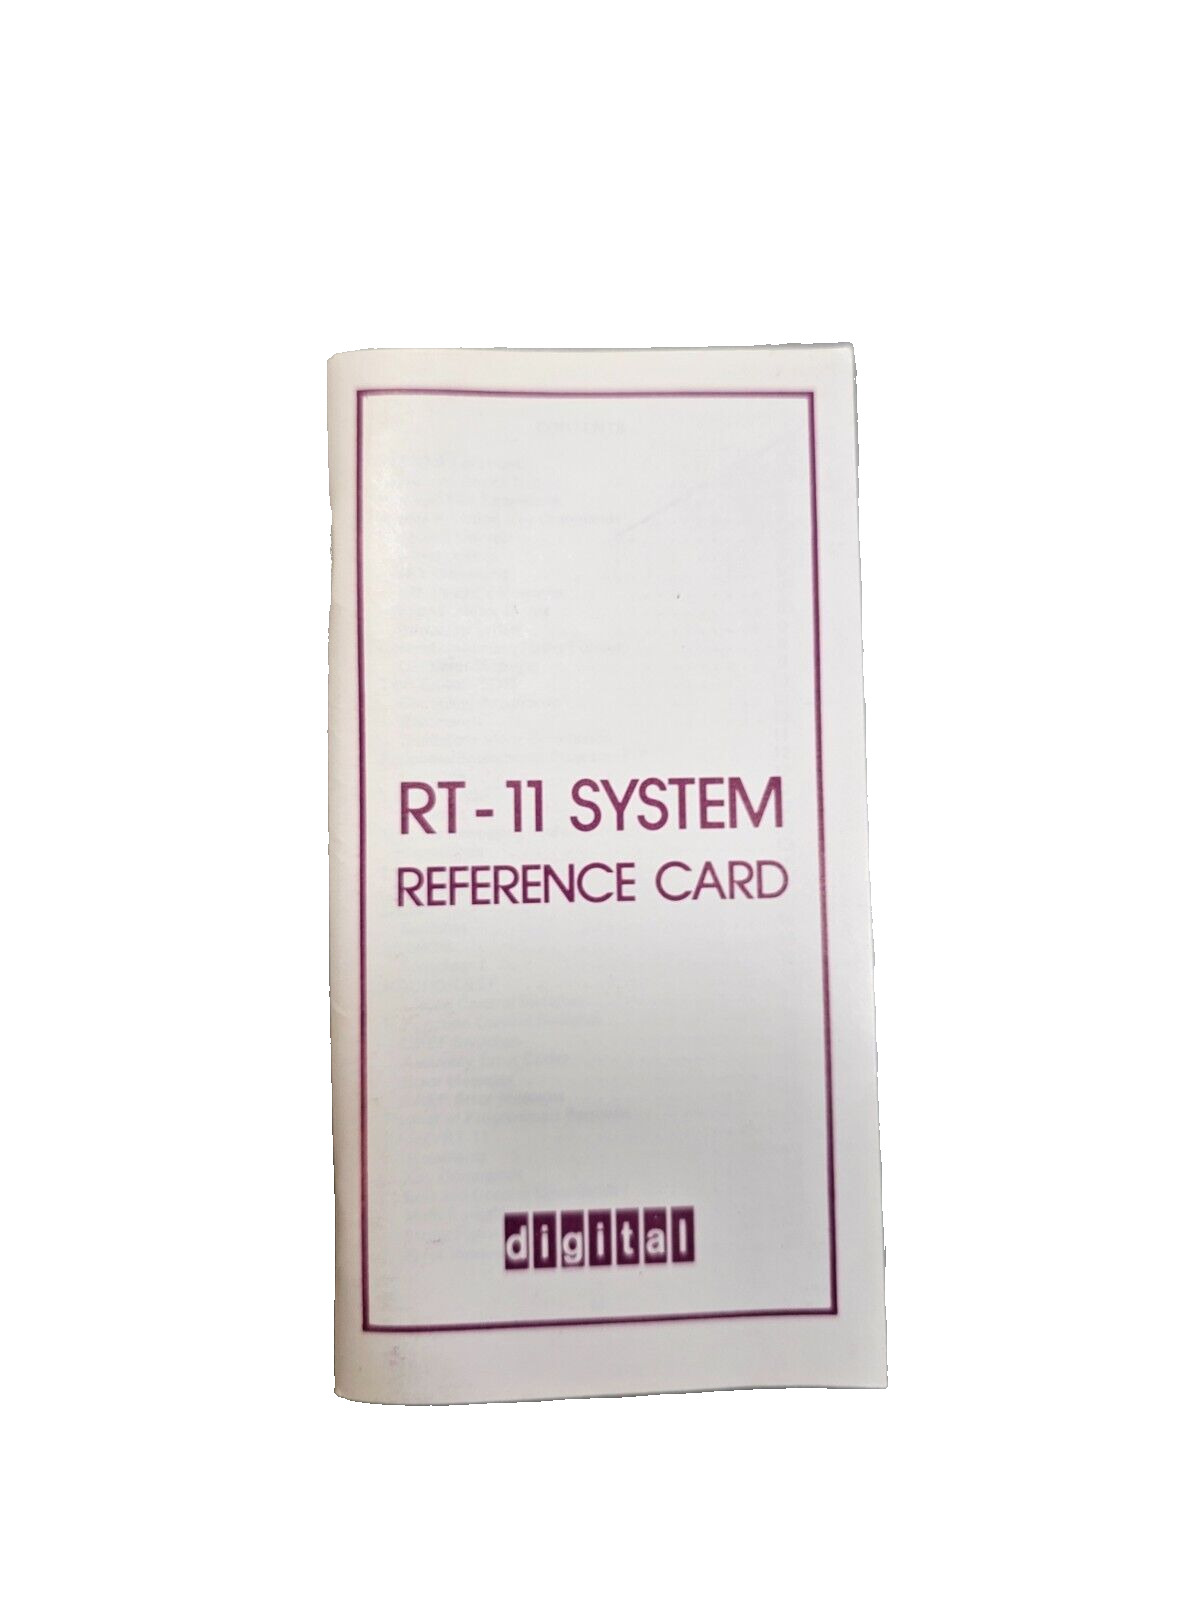 Vintage 1975 Digital Equipment DEC RT-11 System Reference Card